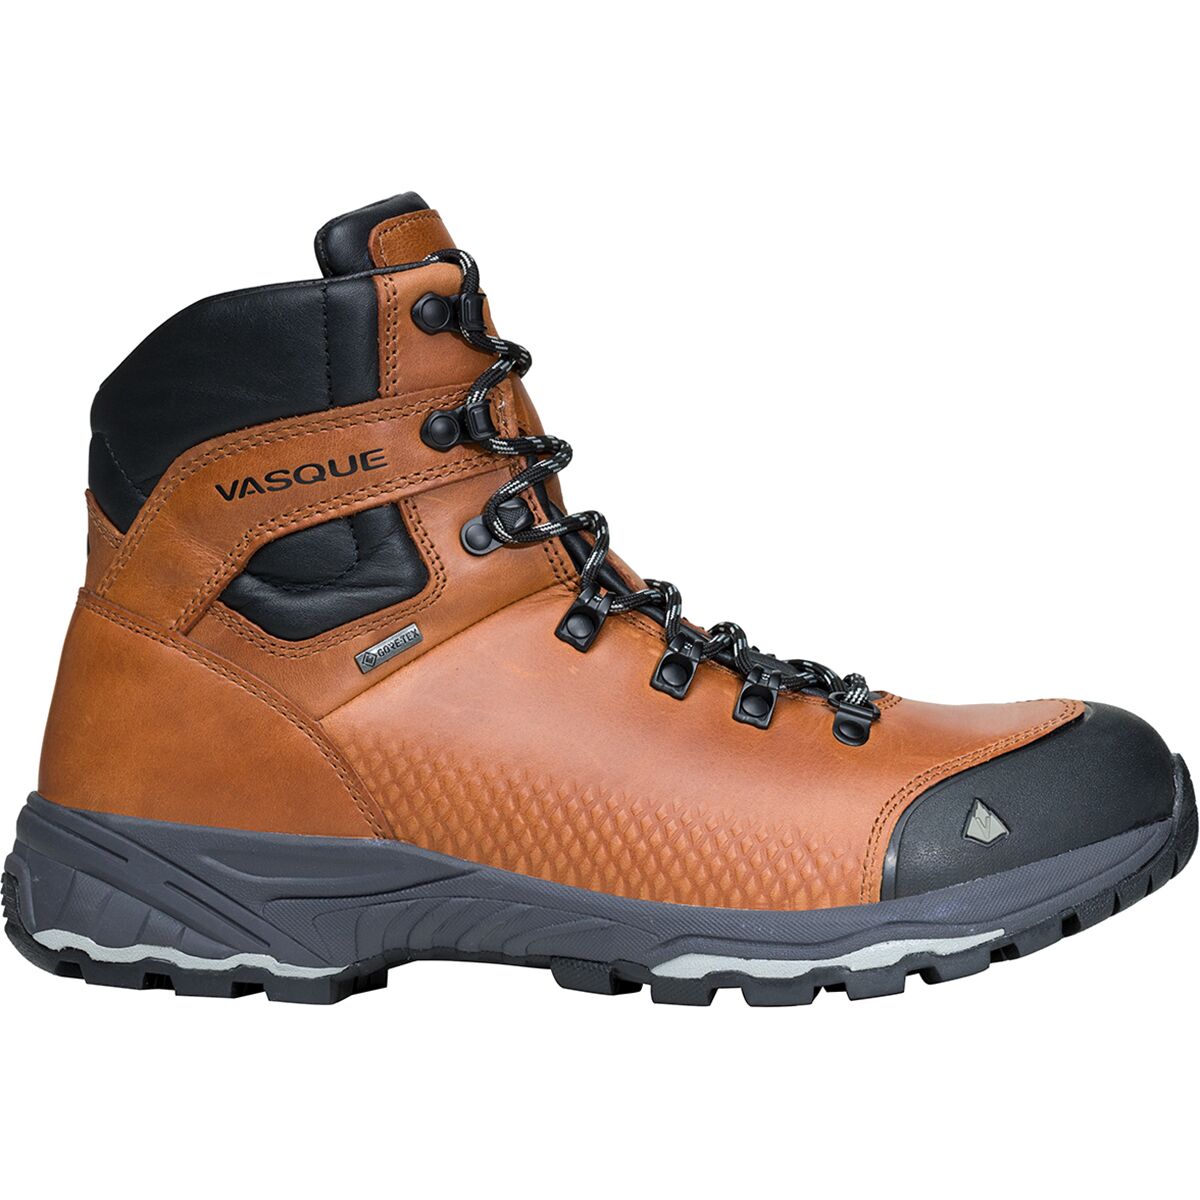 Alp Mate Mid WP Hiking Boot - Men's by Salewa | US-Parks.com